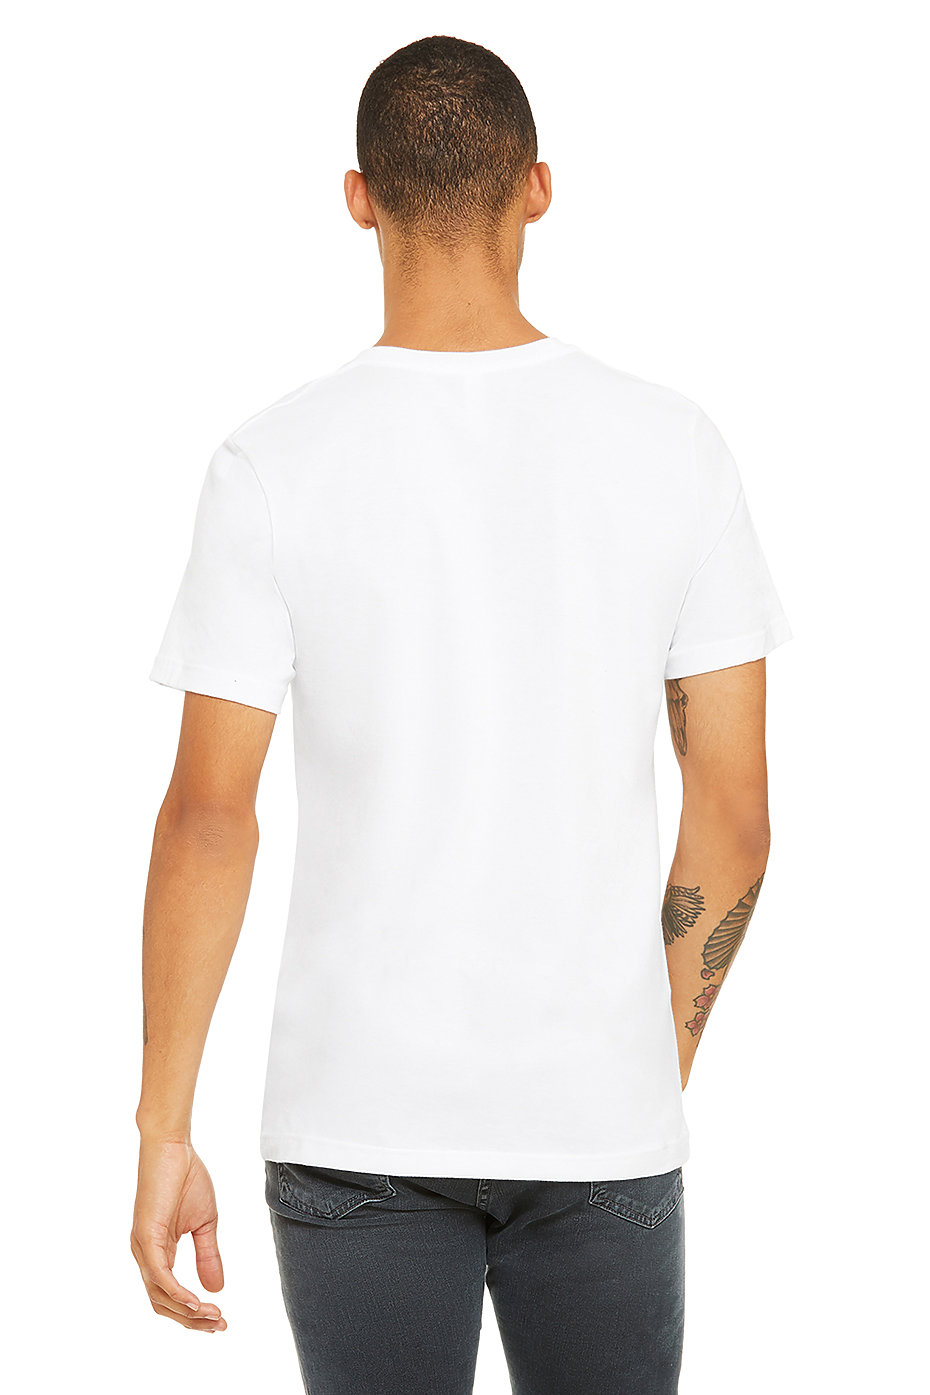 Canvas 3001 Unisex Short Sleeve Jersey T-Shirt with Tear Away Label Shotguns Make Me Happy Bella 